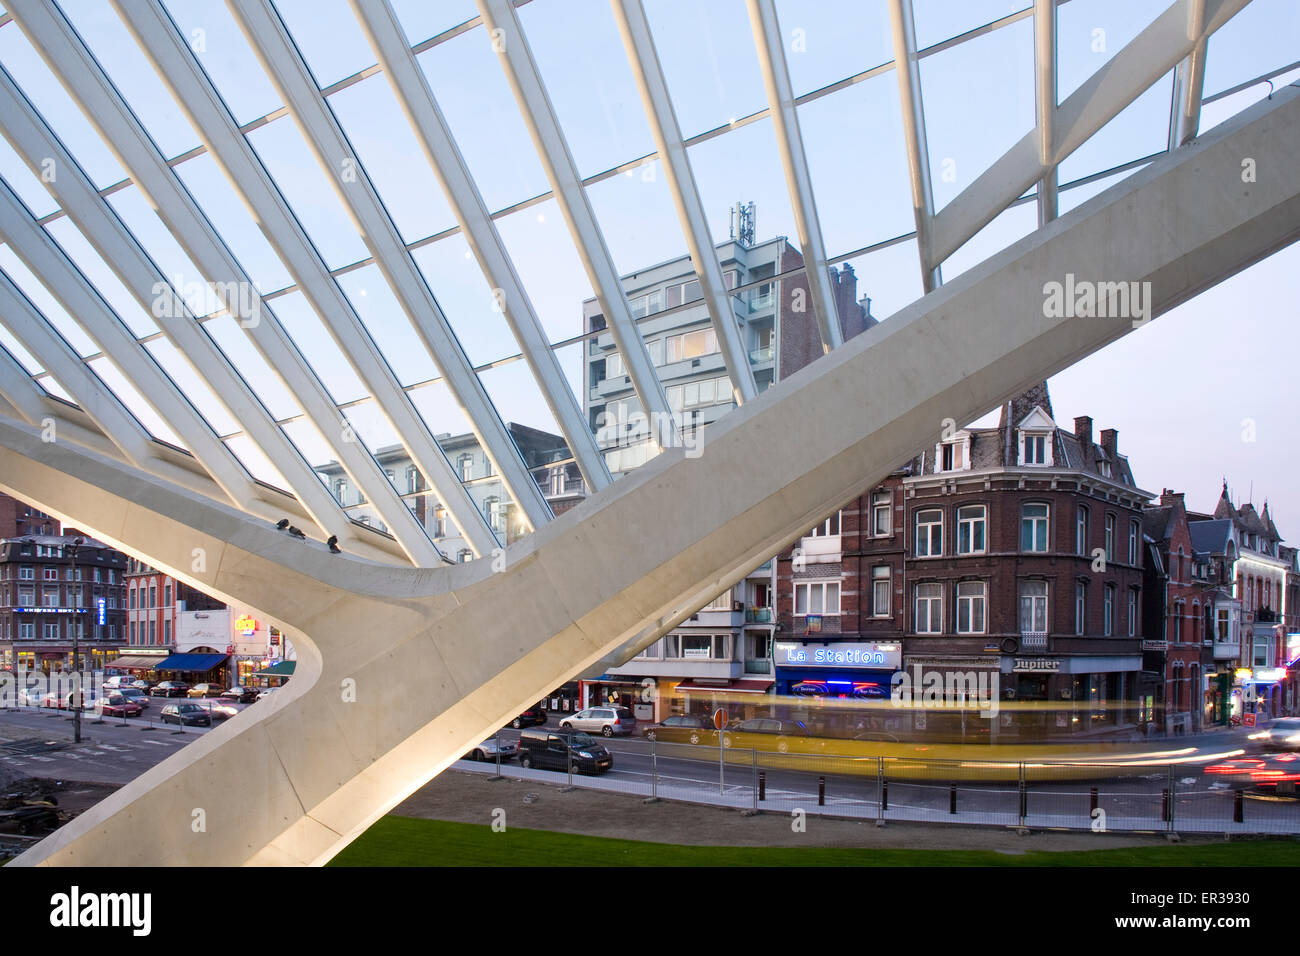 Europe, Belgium, Liege, roof structure of the railway station Liege-Guillemins, architect Santiago Calatrava  Europa, Belgien, L Stock Photo